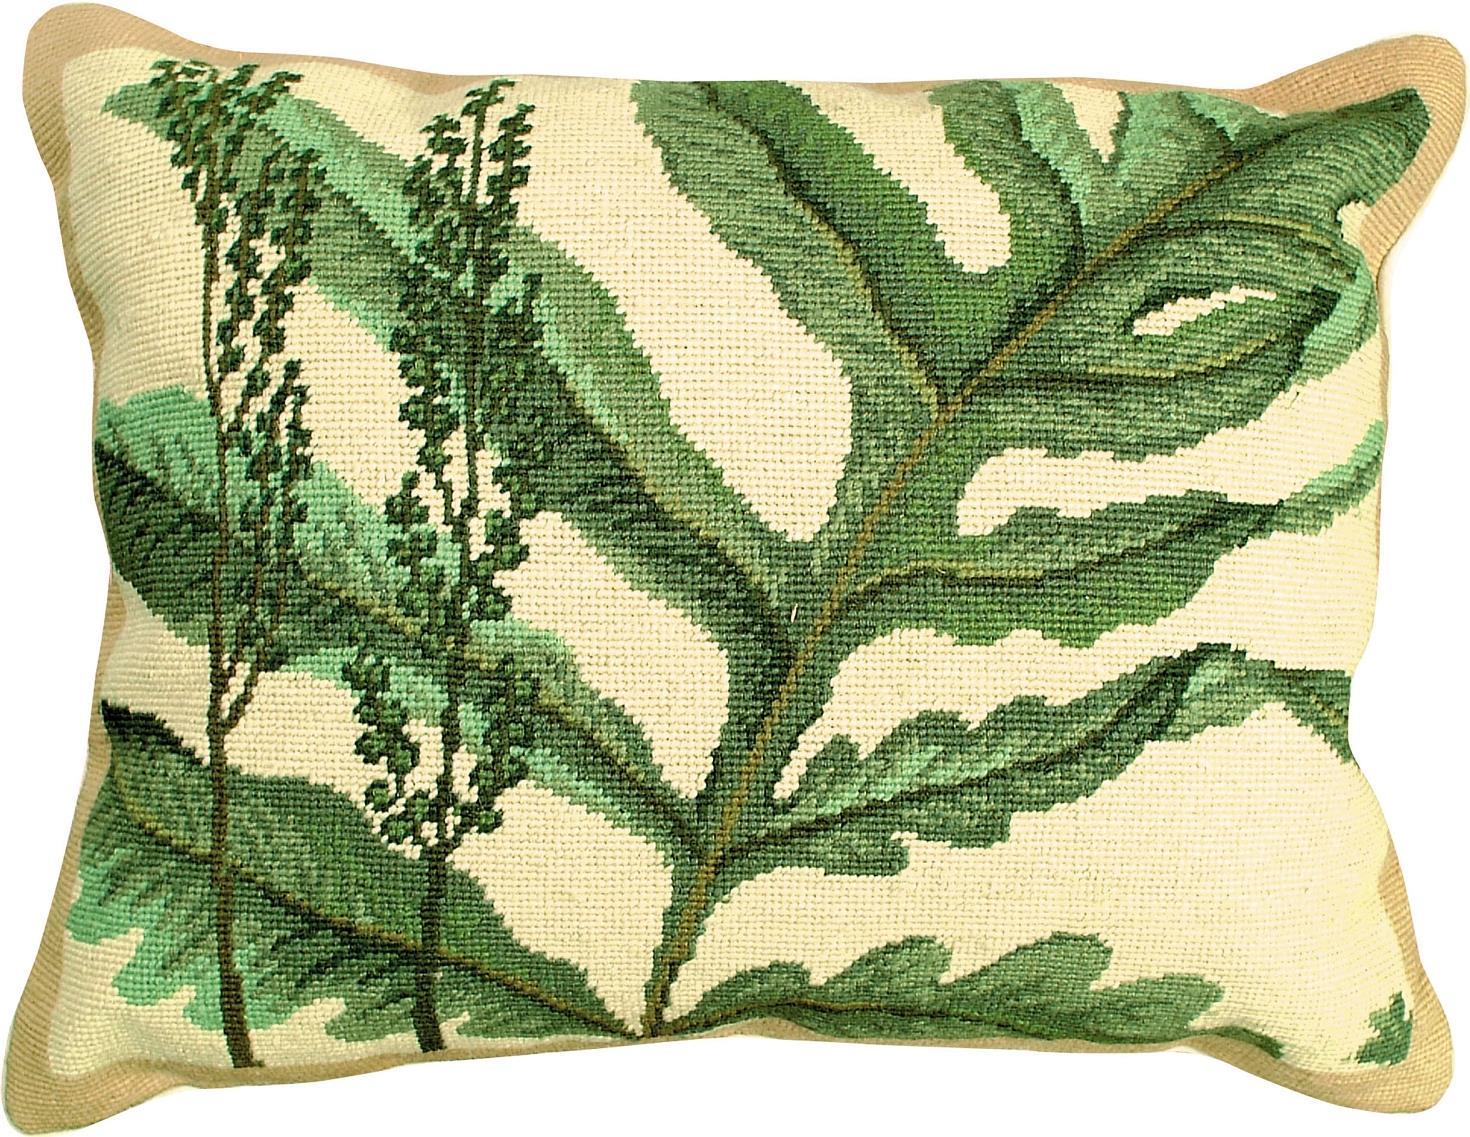 Throw Pillow Needlepoint Fern 16x20 20x16 Green Down Insert Wool Cotton Velvet-Image 1